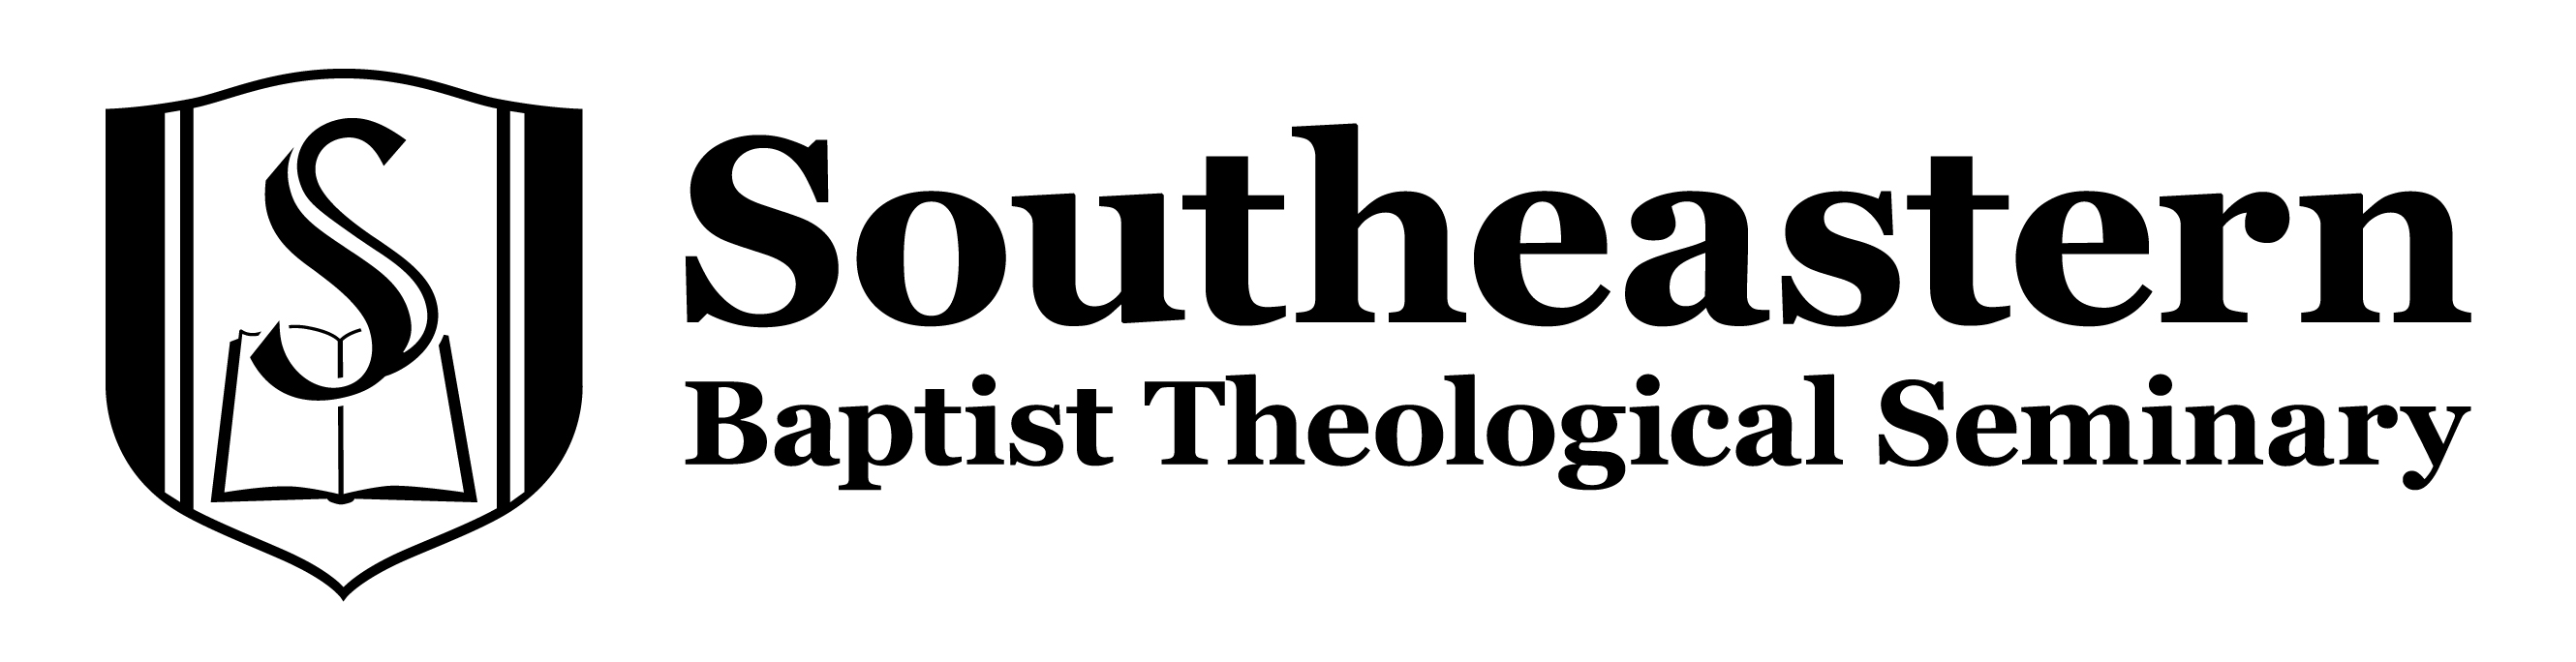 Sponsor Southeastern Baptist Theological Seminary